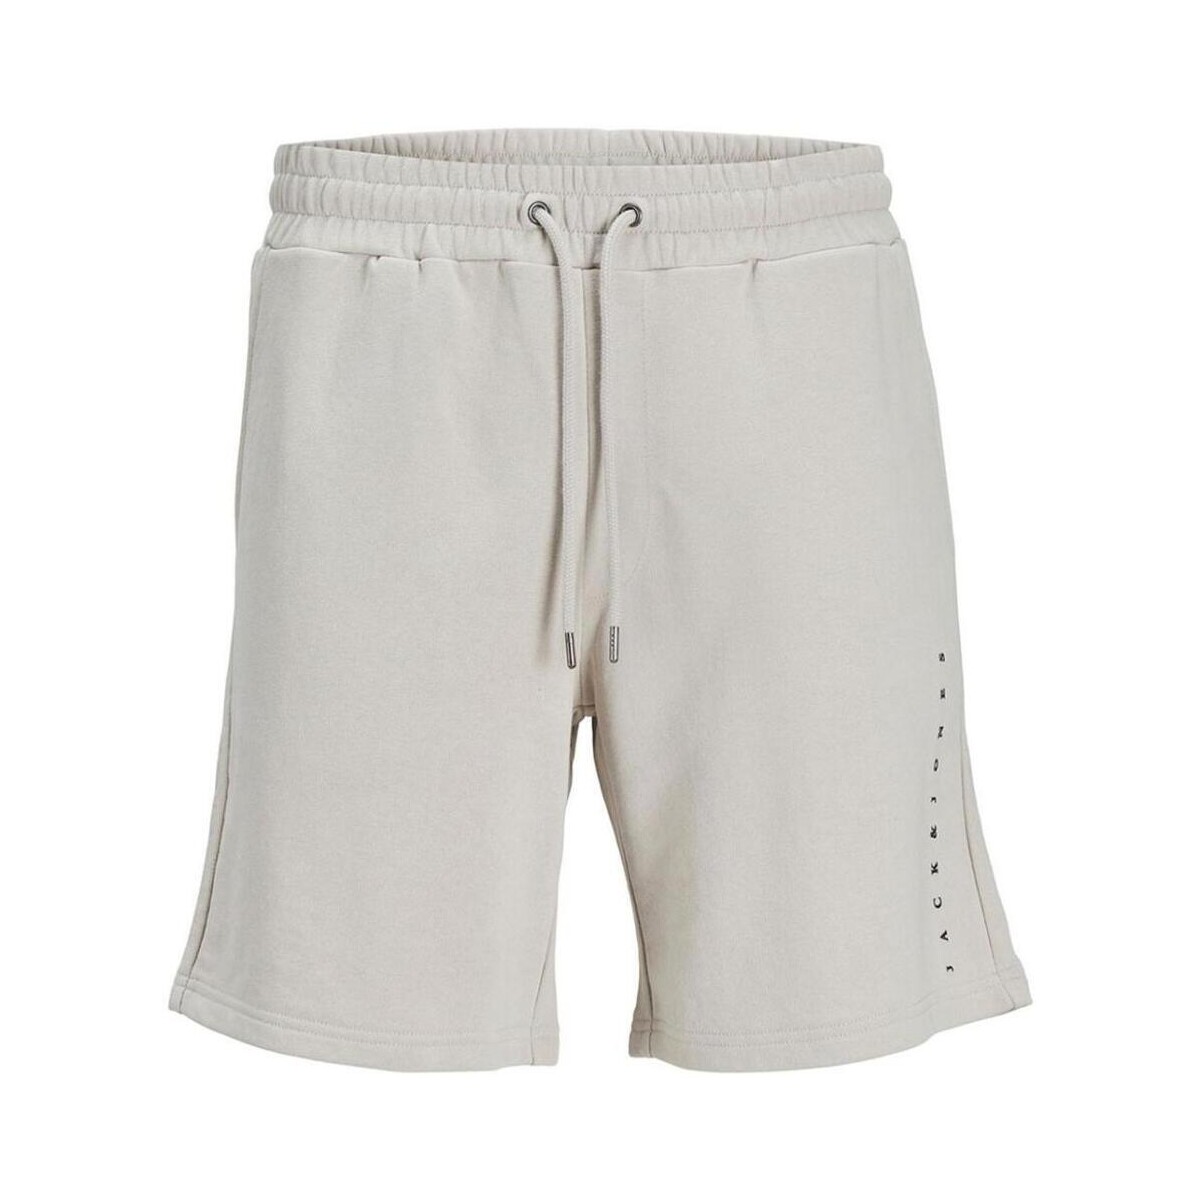 Kleidung Herren Shorts / Bermudas Jack & Jones  Weiss